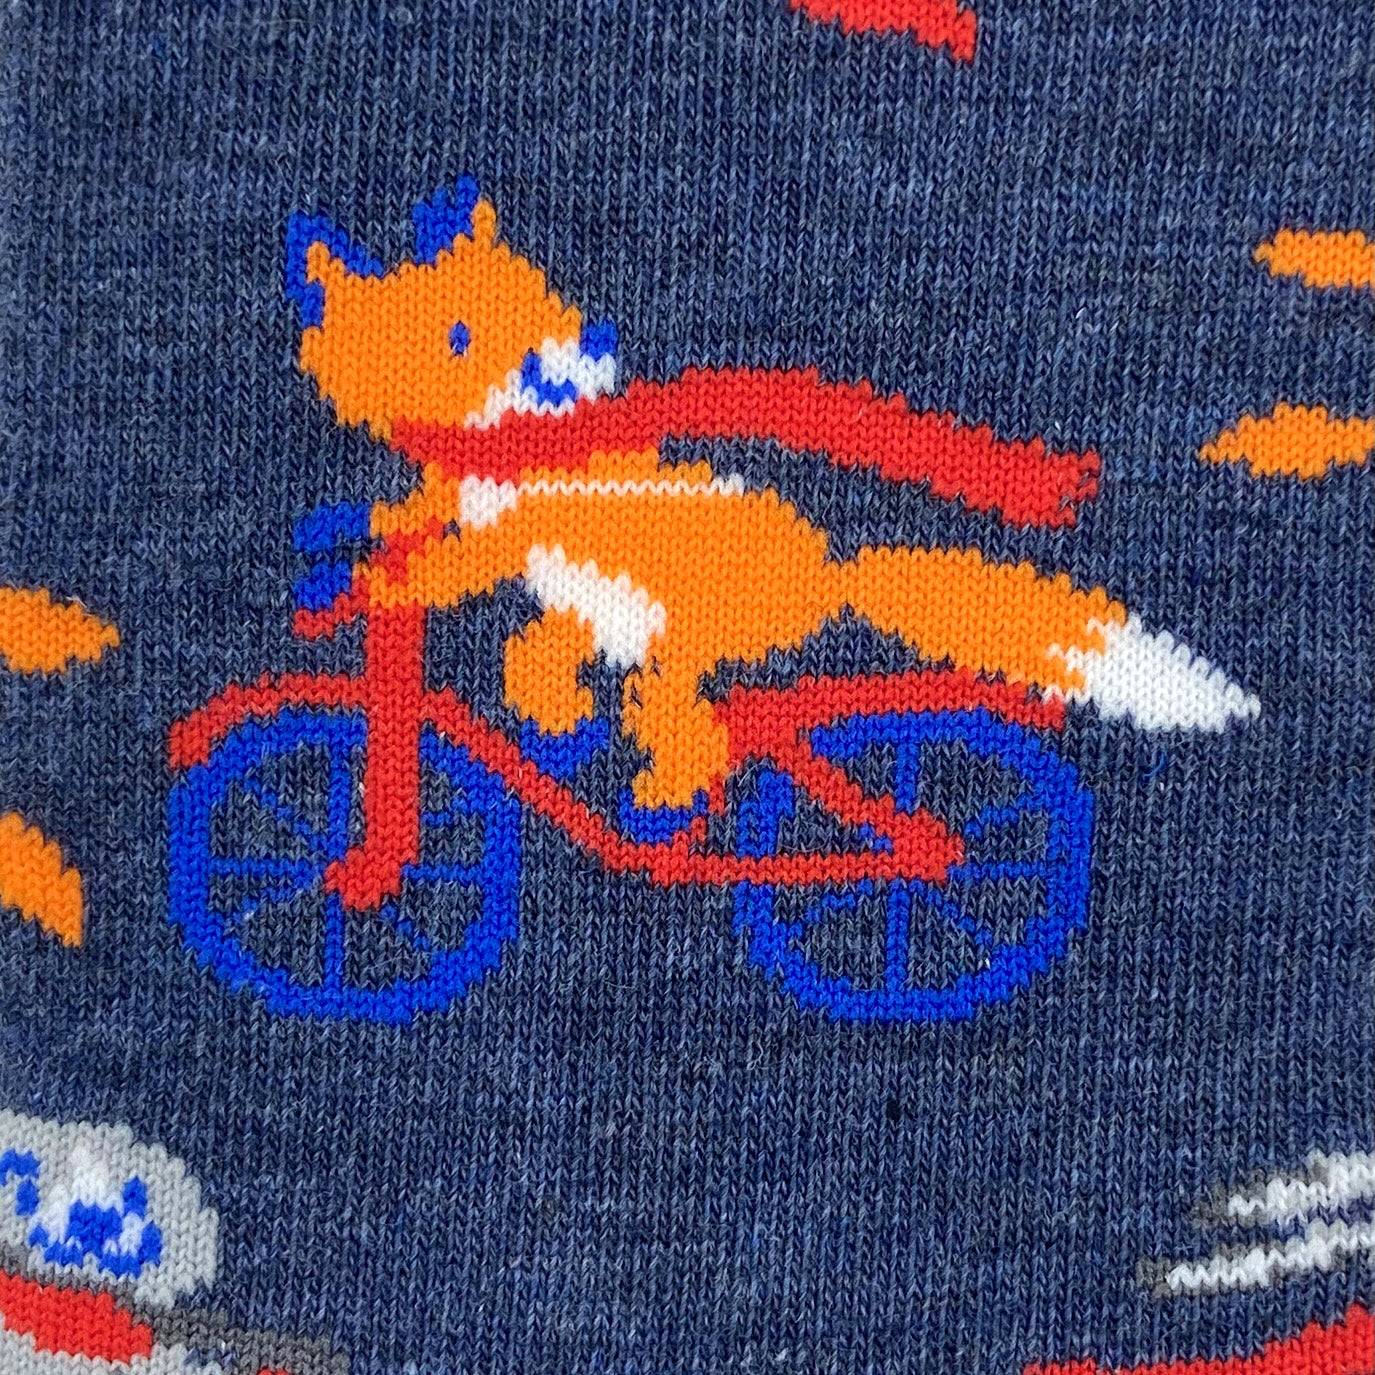 Comfy Bunny Rabbit Orange Fox Riding Bicycles Patterned Novelty Socks